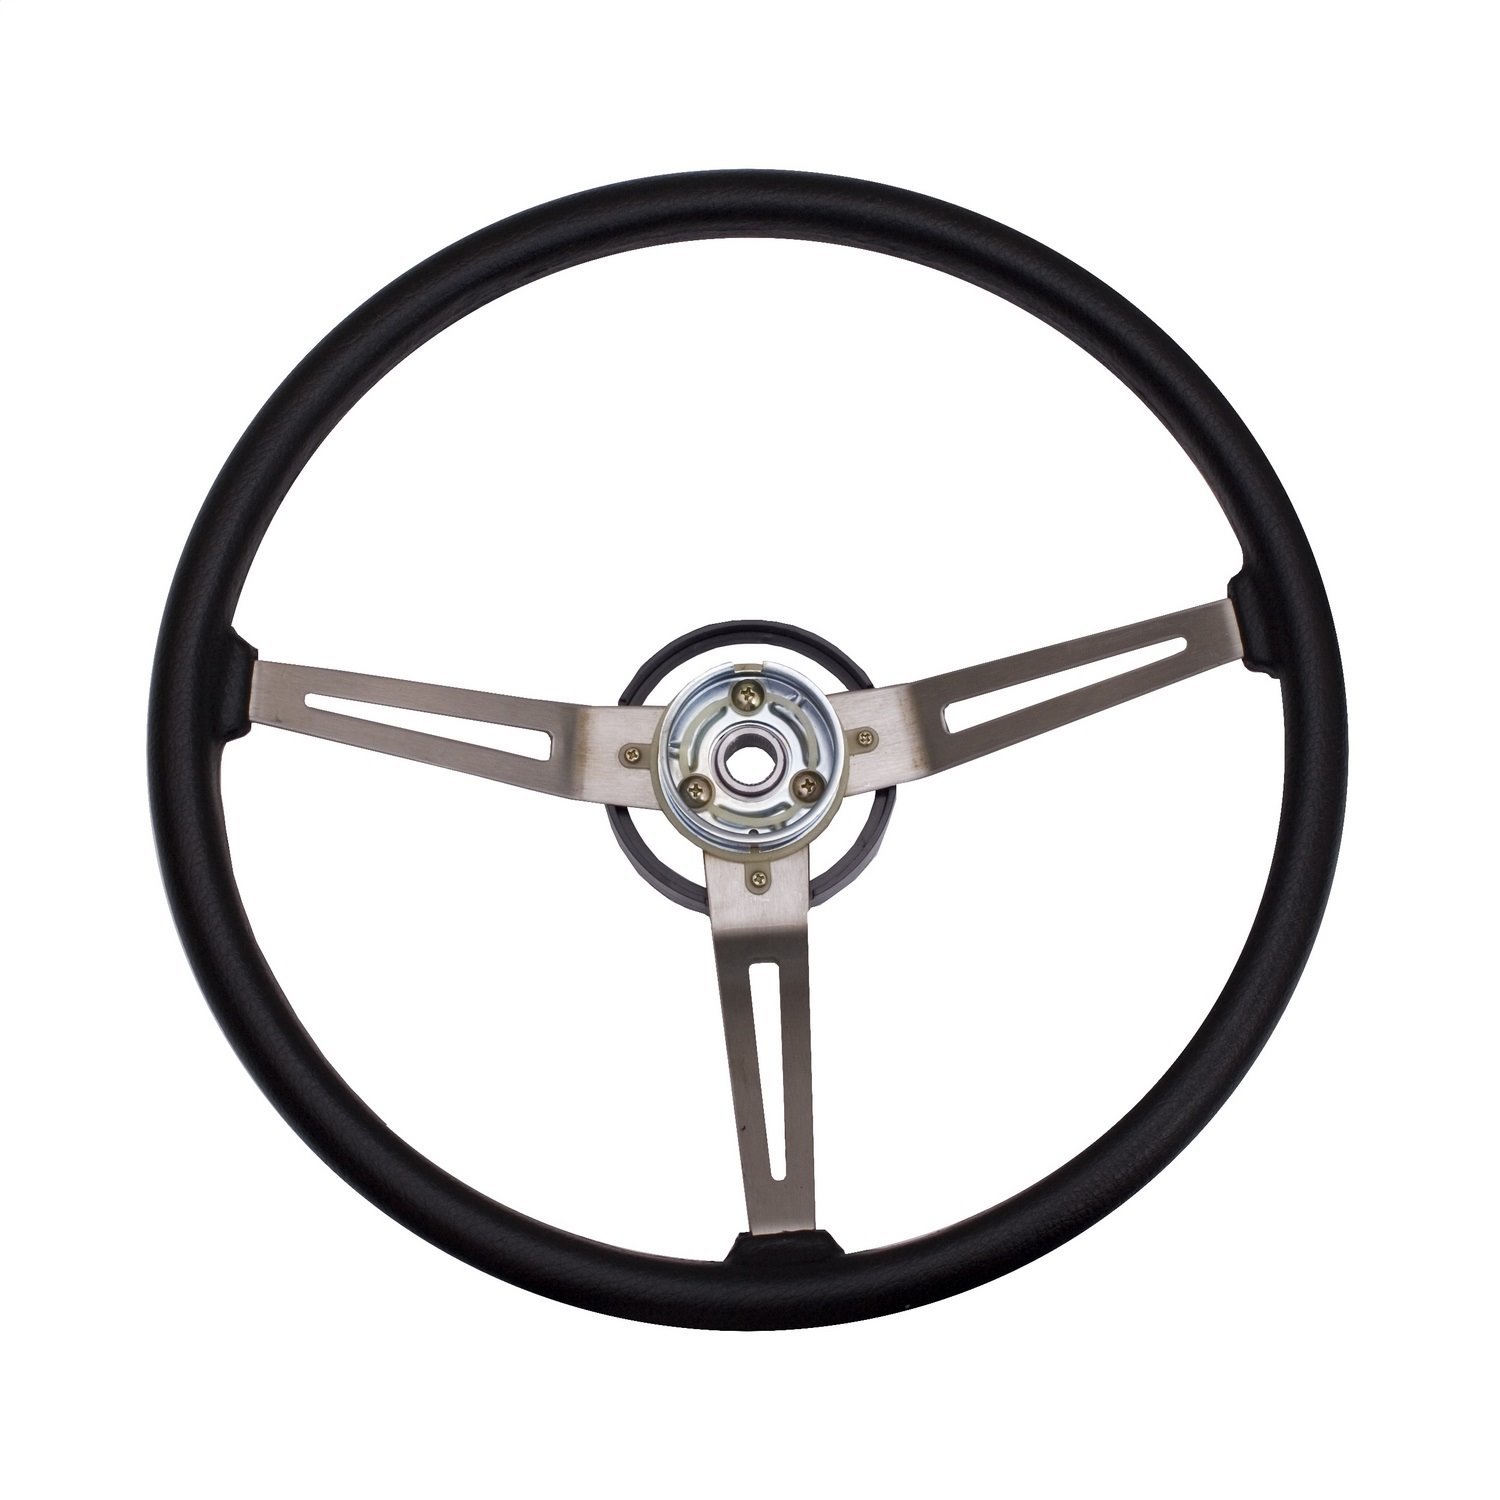 This black vinyl steering wheel from Omix-ADA fits 76-95 Jeep CJs & Wranglers.